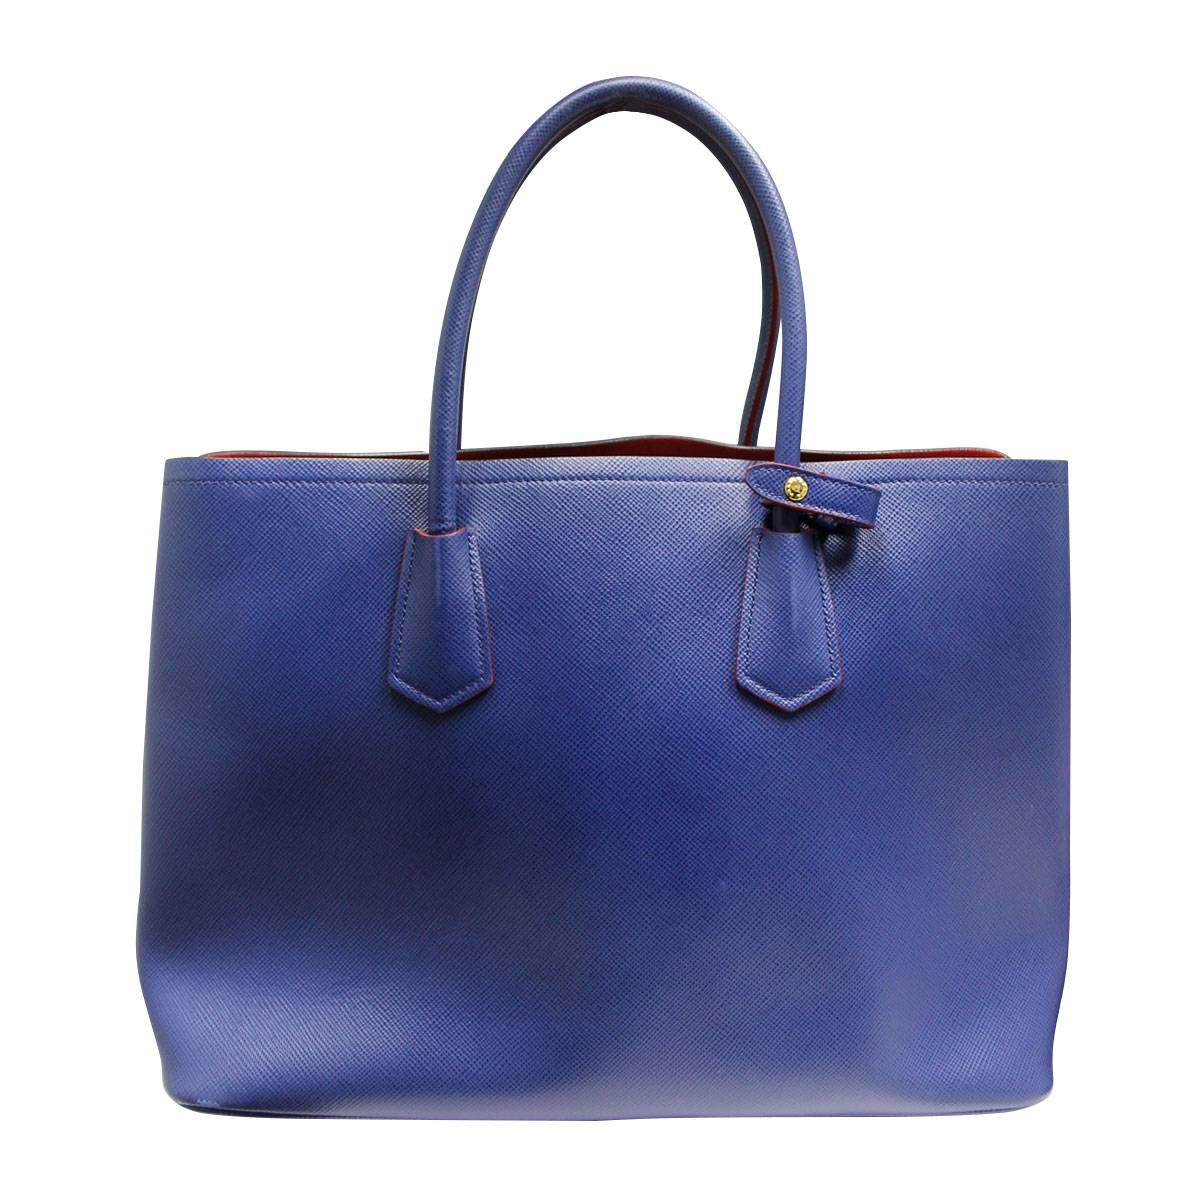 Company: Prada
Style: Double Bag Tote
Handles: Saffiano Calfskin Rolled Handles: Drop: 5.5